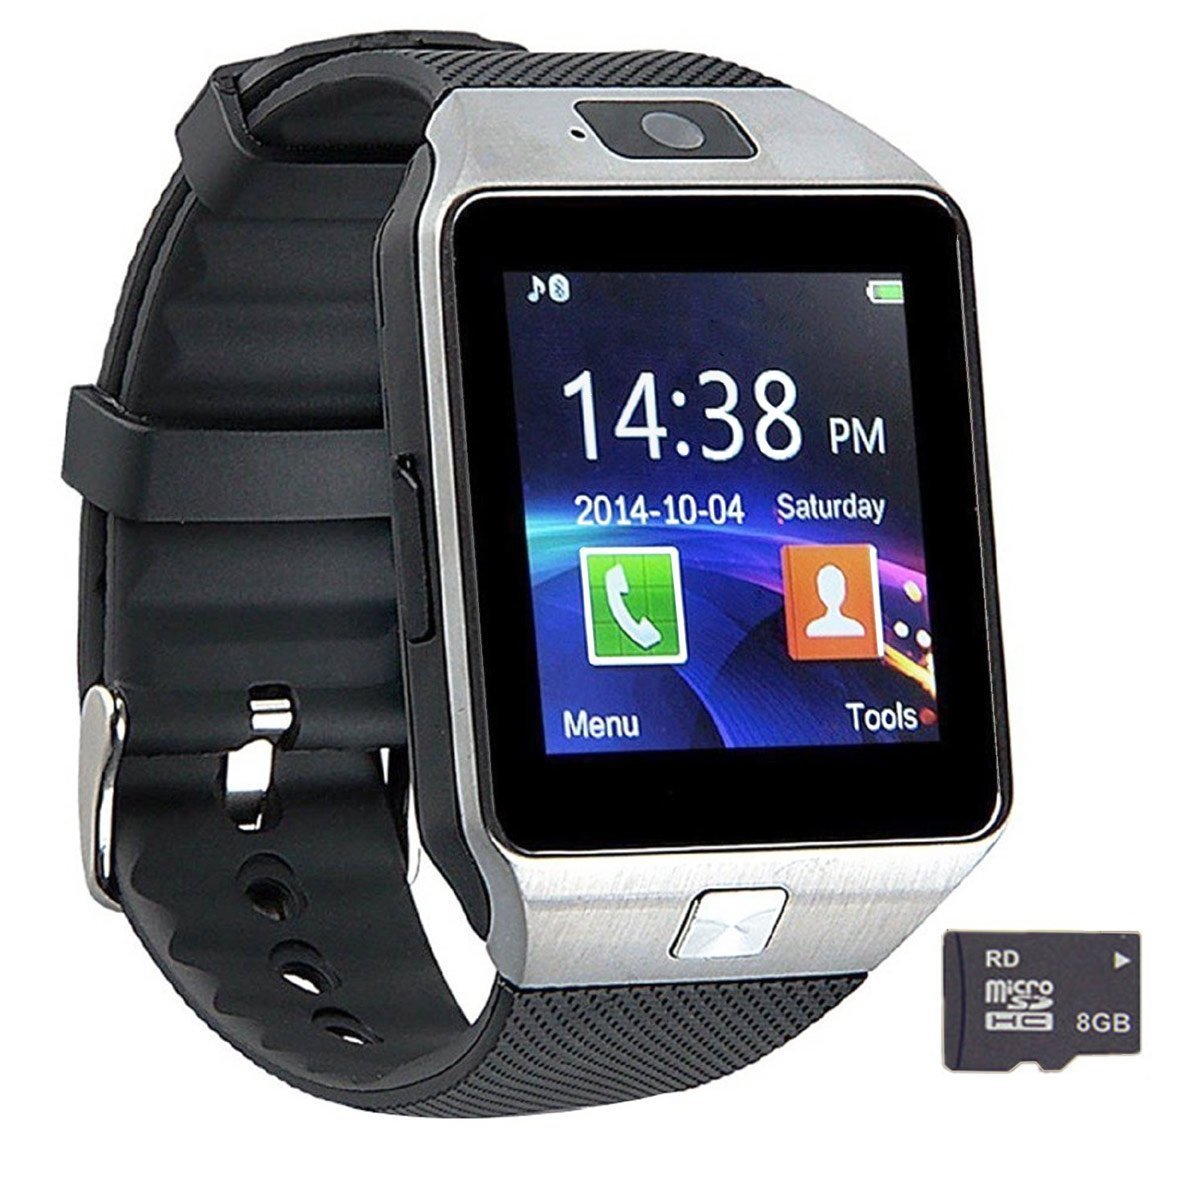 Ios 8 Iphone 6 Wallpaper Review Pandaoo Smart Watch - Touch Watch Black , HD Wallpaper & Backgrounds